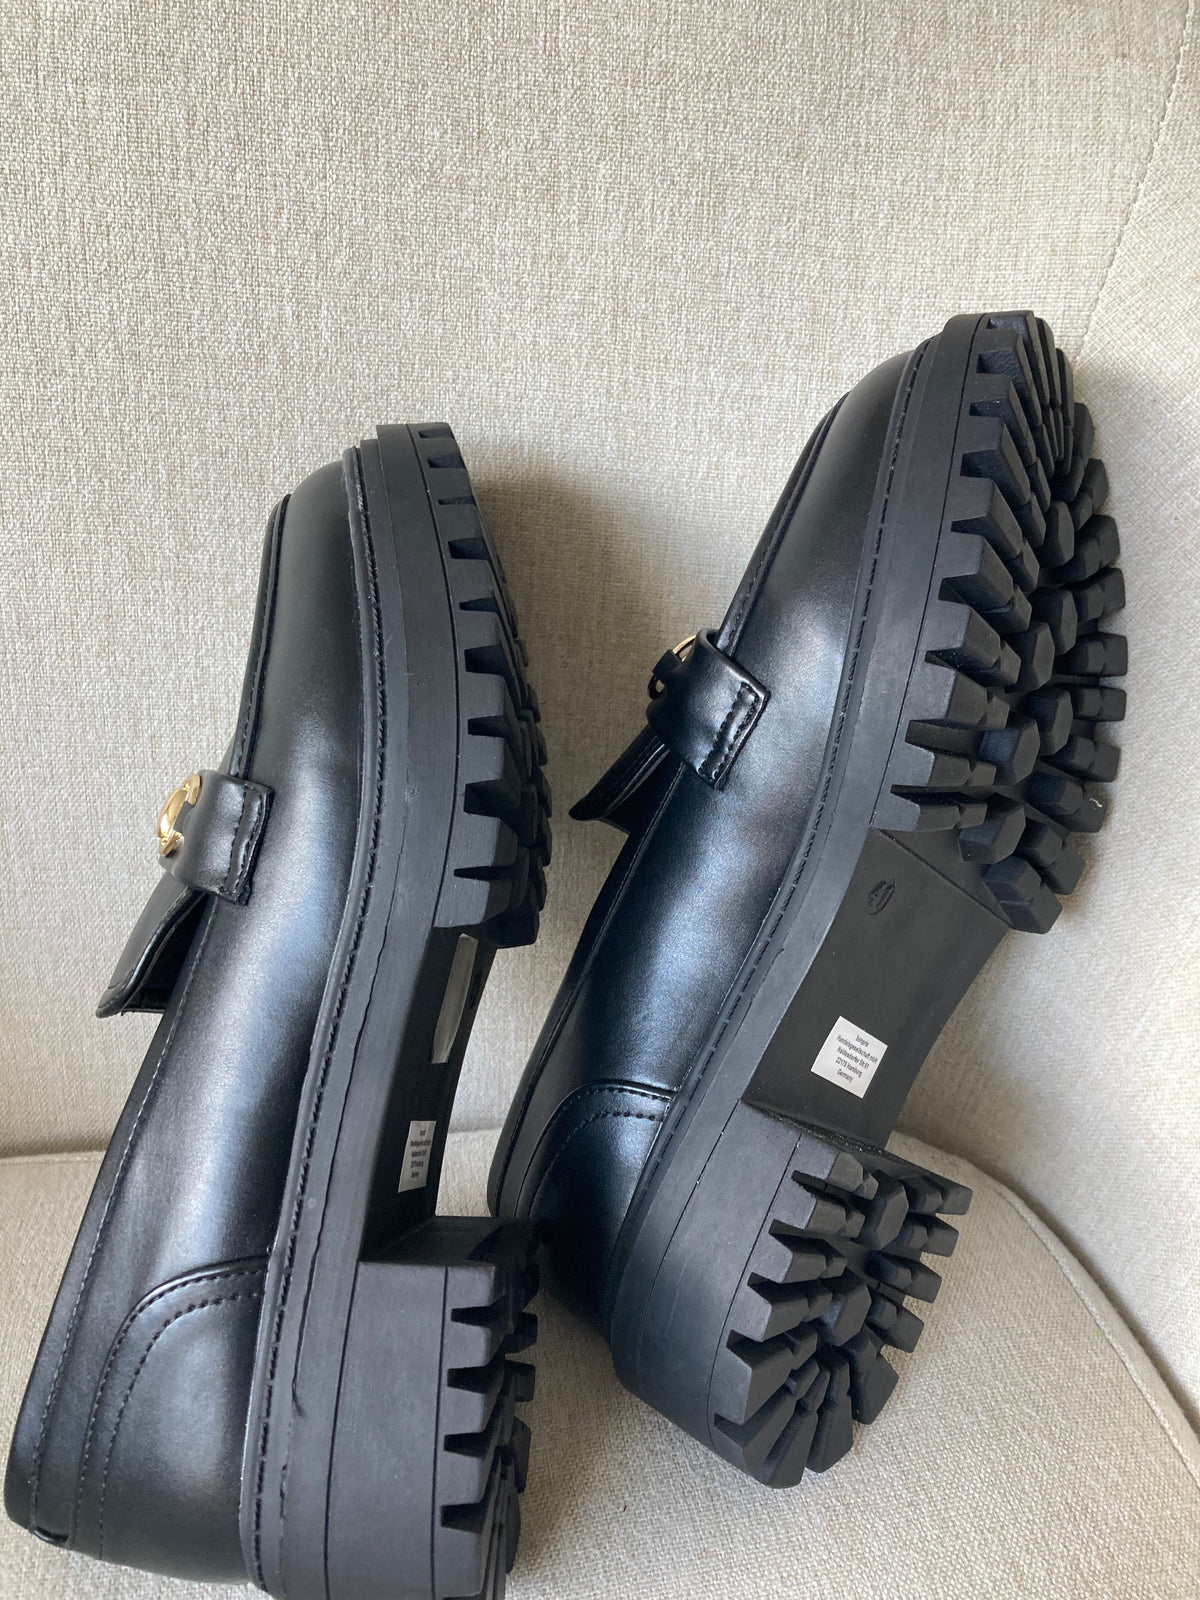 Classy Black Penny Loafers by BODYFLIRT